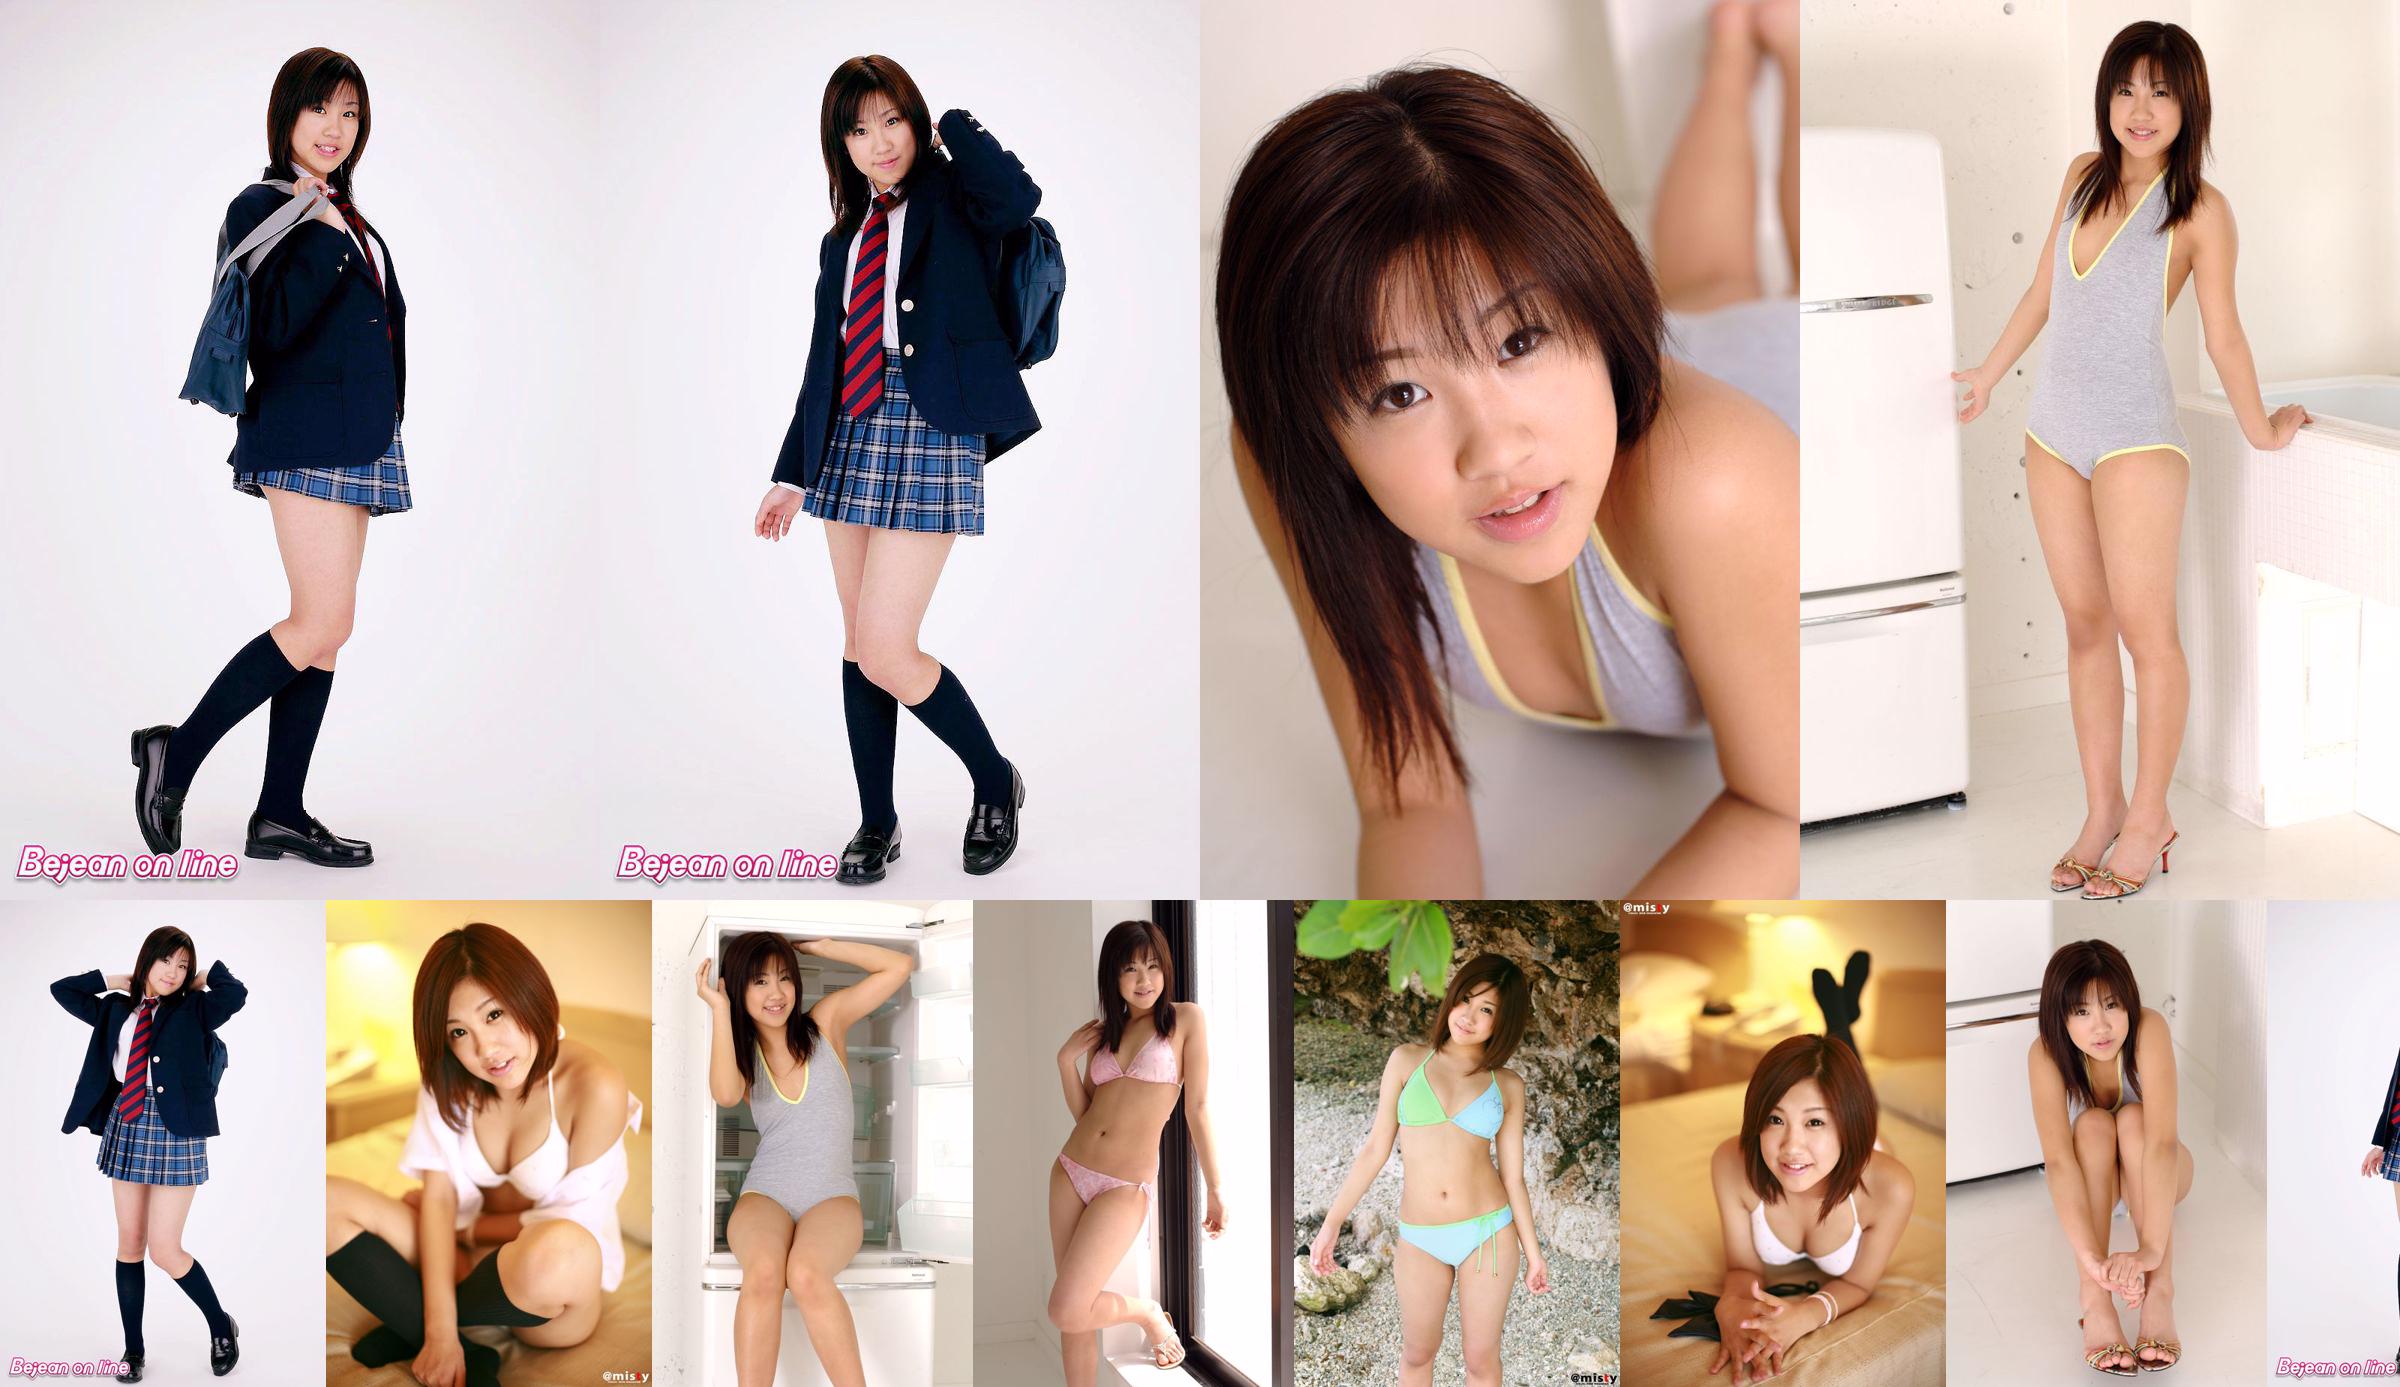 Scuola privata femminile Bejean Maho Nagase Maho Nagase [Bejean On Line] No.639d2c Pagina 1